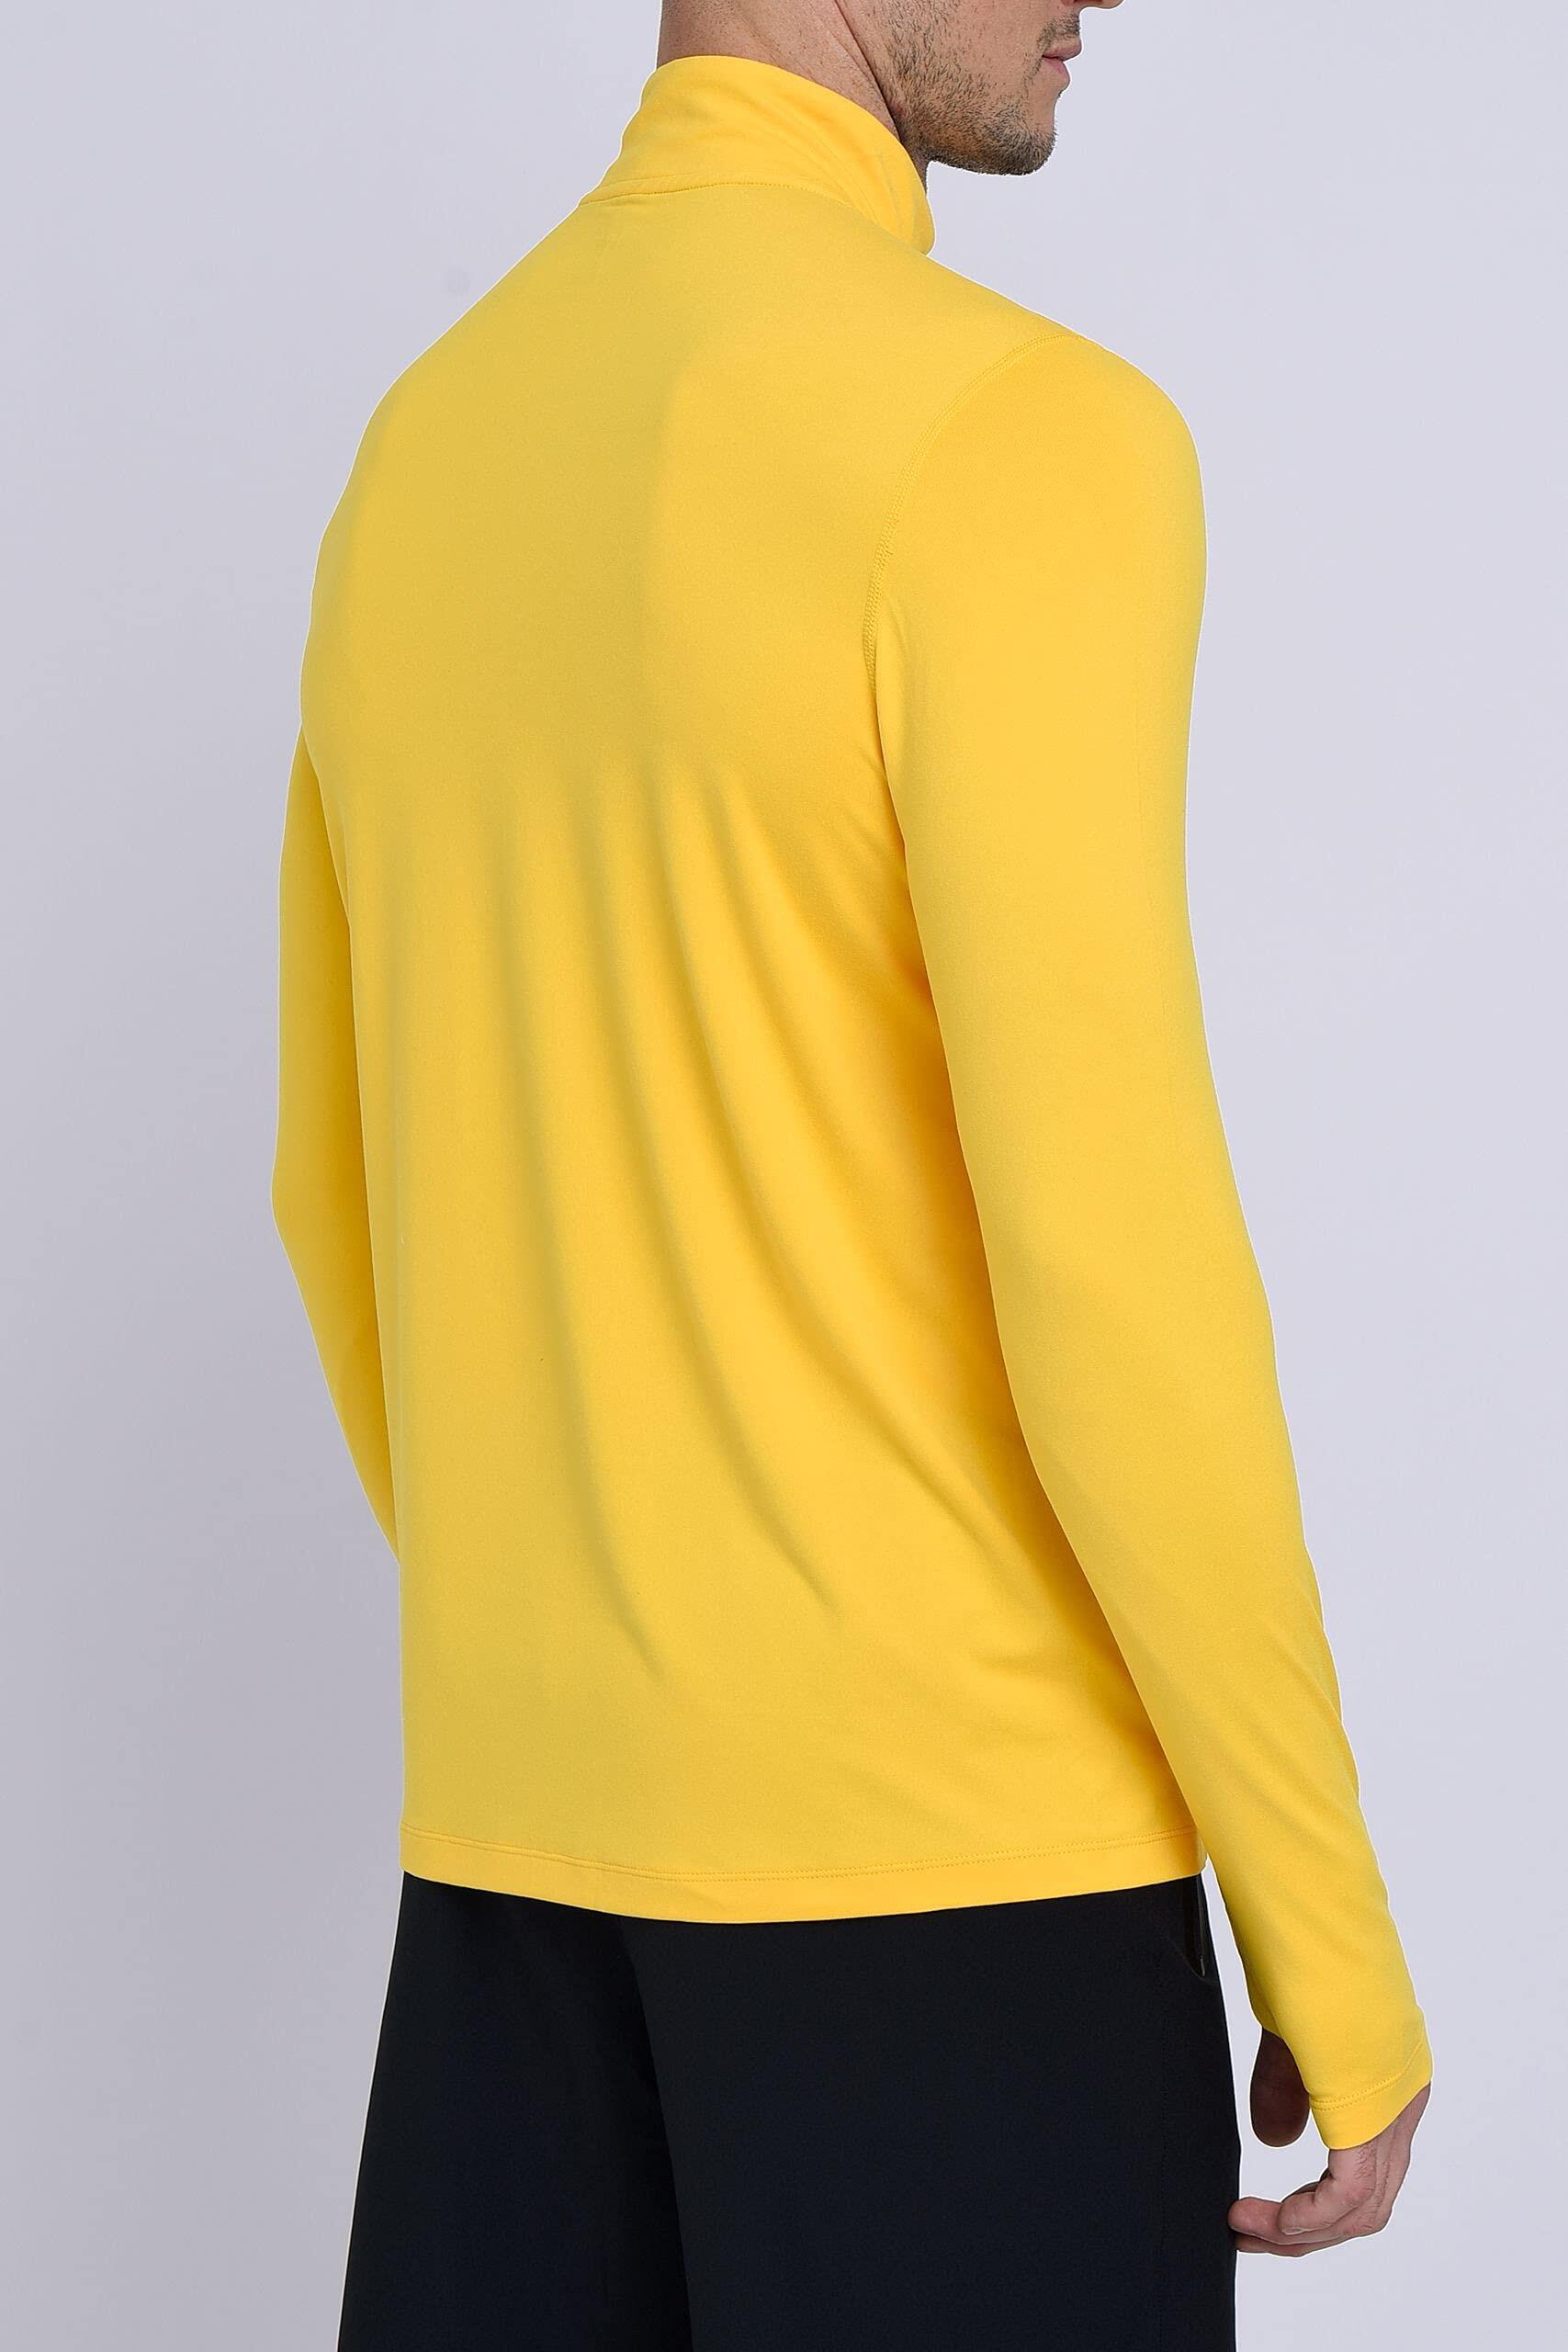 Men's Fusion Long Sleeve Half Zip Running Gym Top - Spectra Yellow 2/6